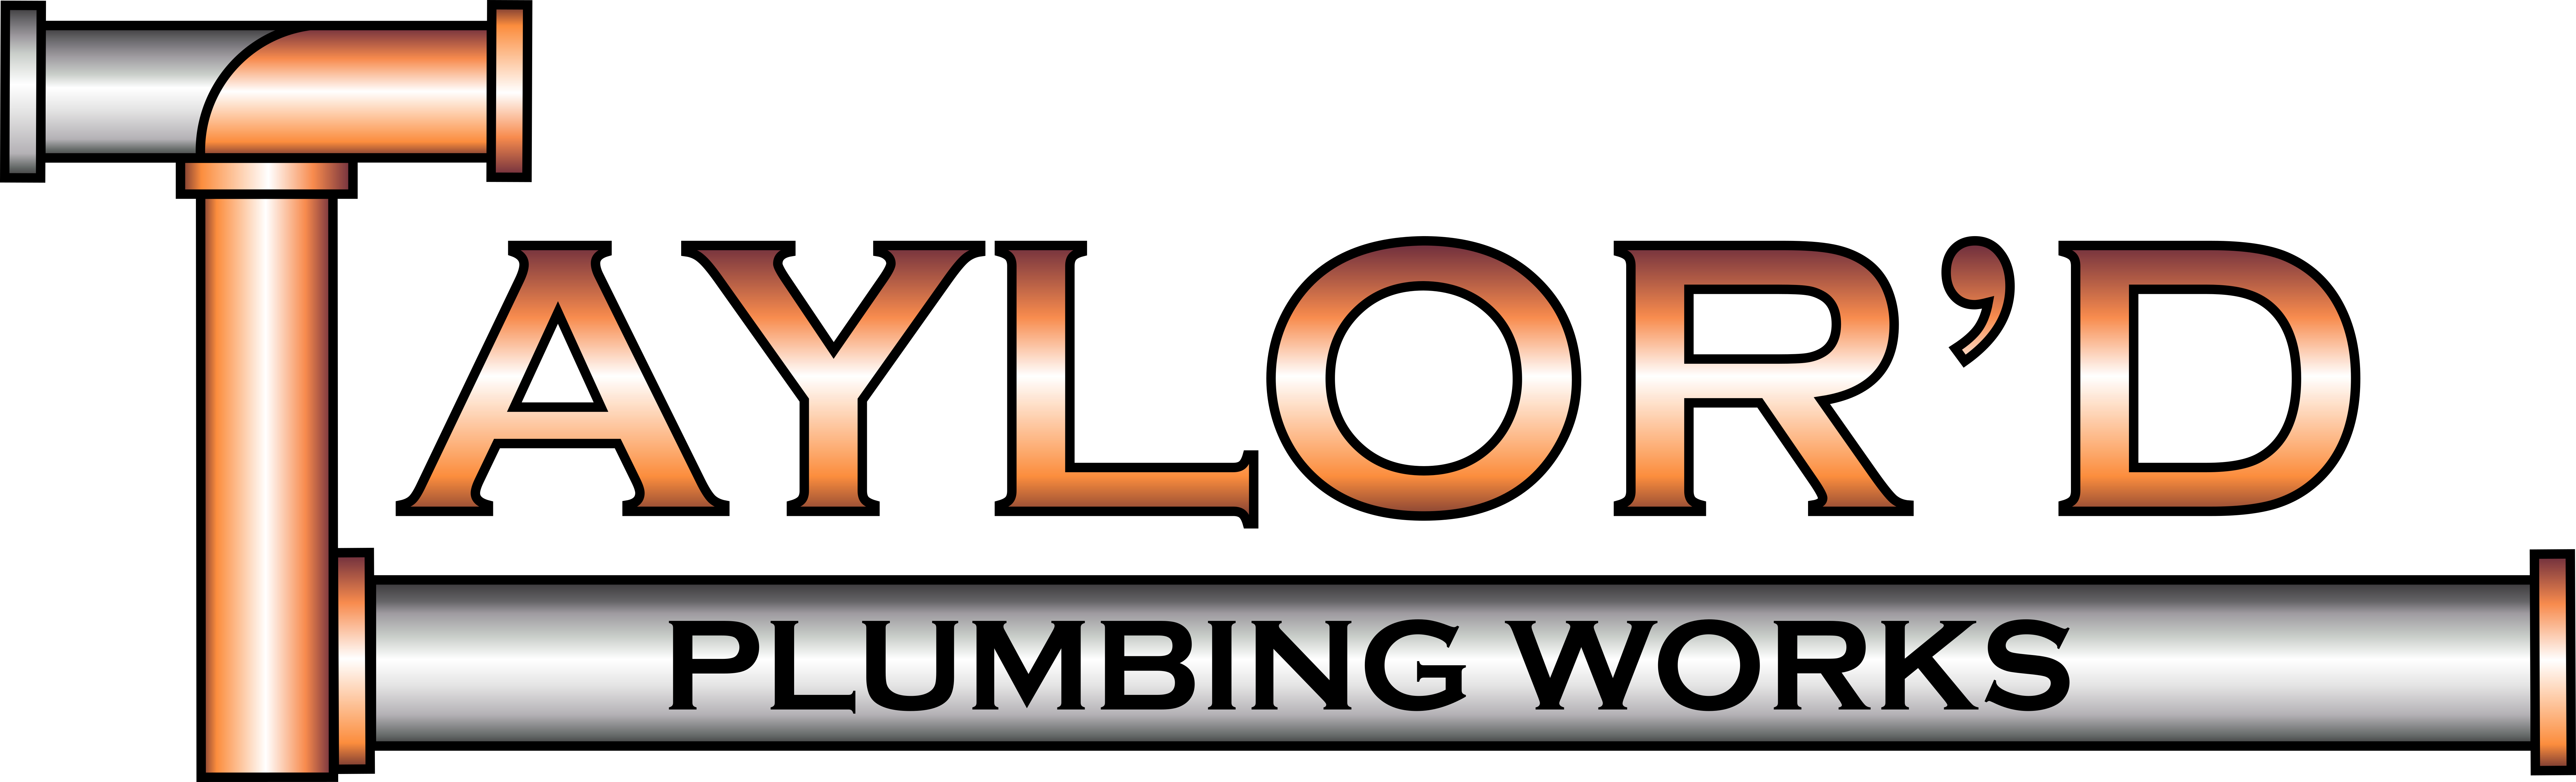 Taylor'd Plumbing Works logo